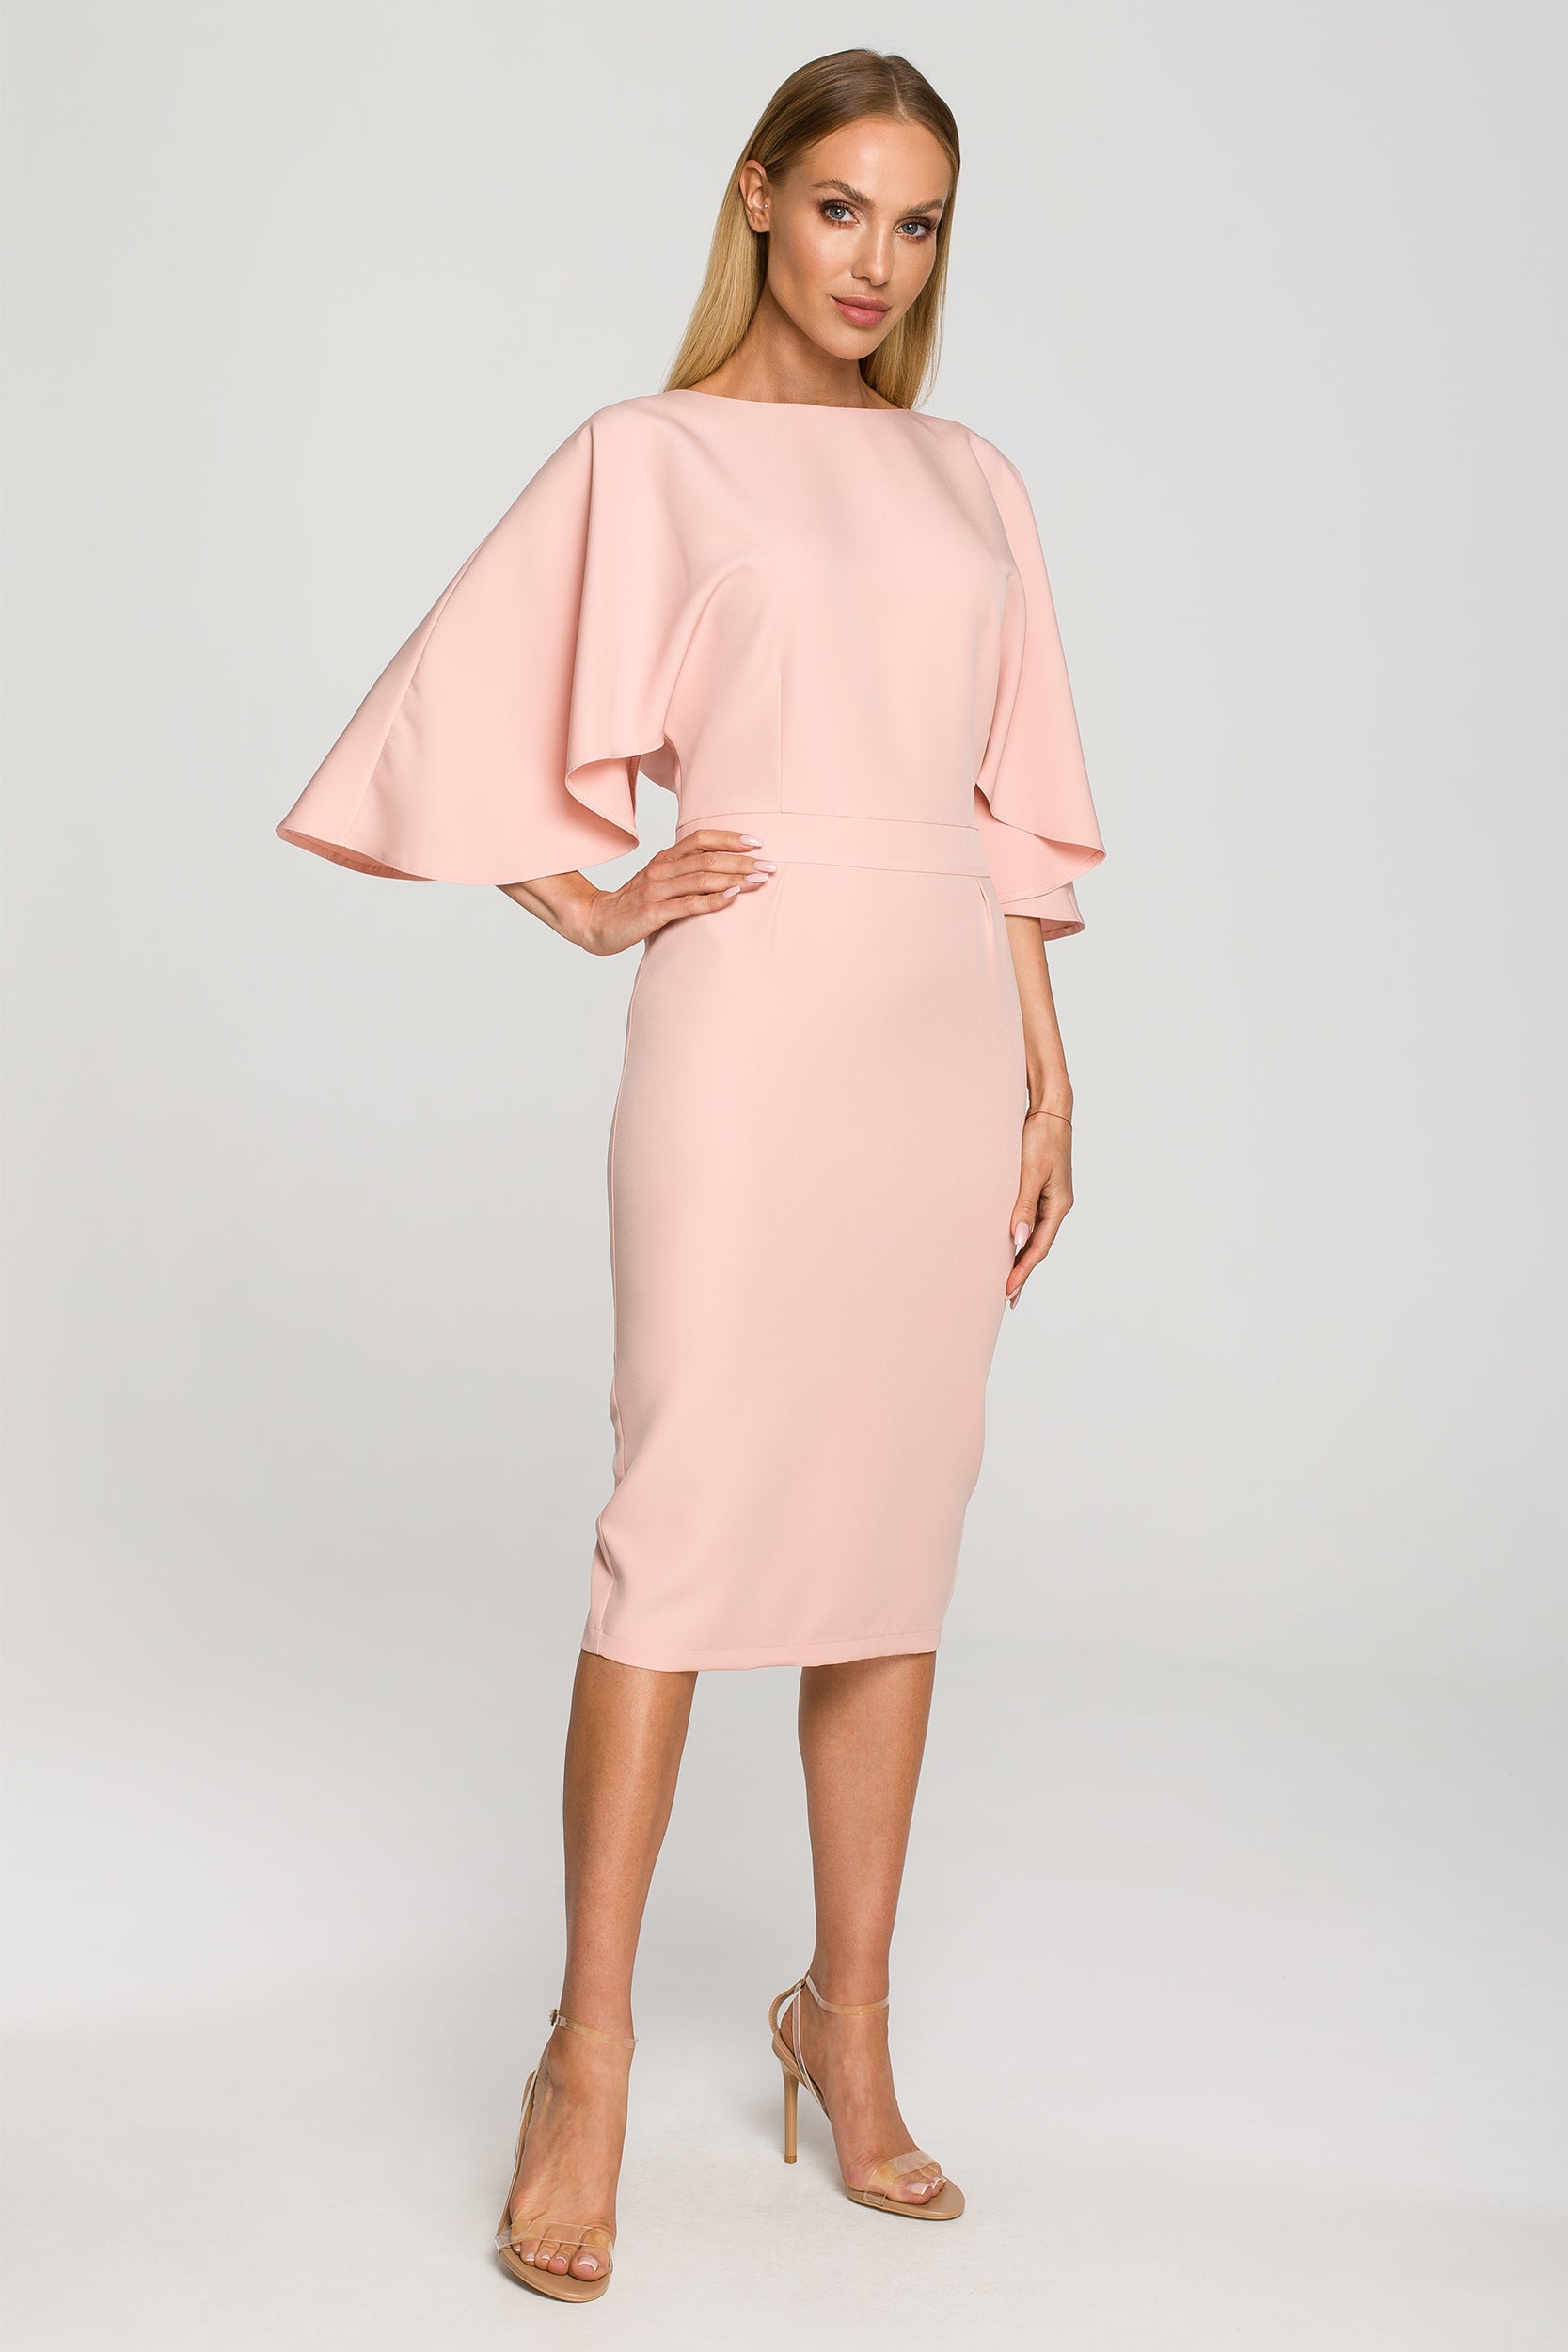 Kimono Sleeve Pink Midi Dress